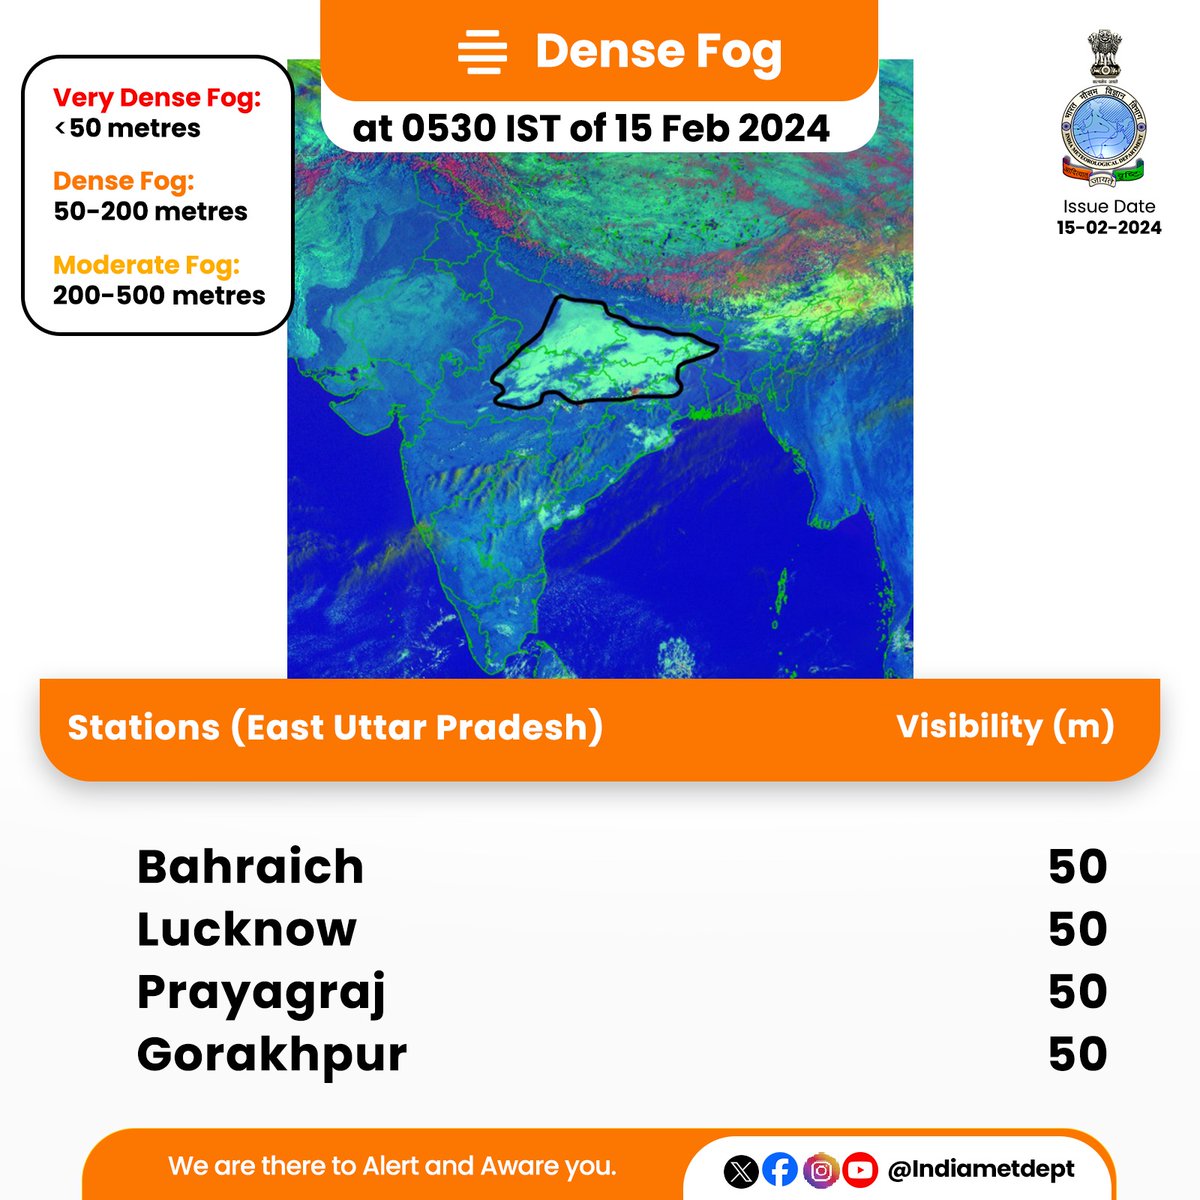 Dense fog reported over East Uttar Pradesh.   

#UPWeather #DenseFog #FogAlert 

@AAI_Official
@dgcaindia
@railminindia
@nhai_official 
@UP_SDMA
@moesgoi
@DDNewslive
@ndmaindia
@airnewsalerts
@CentreLucknow
@CMOfficeUP
@myogiadityanath